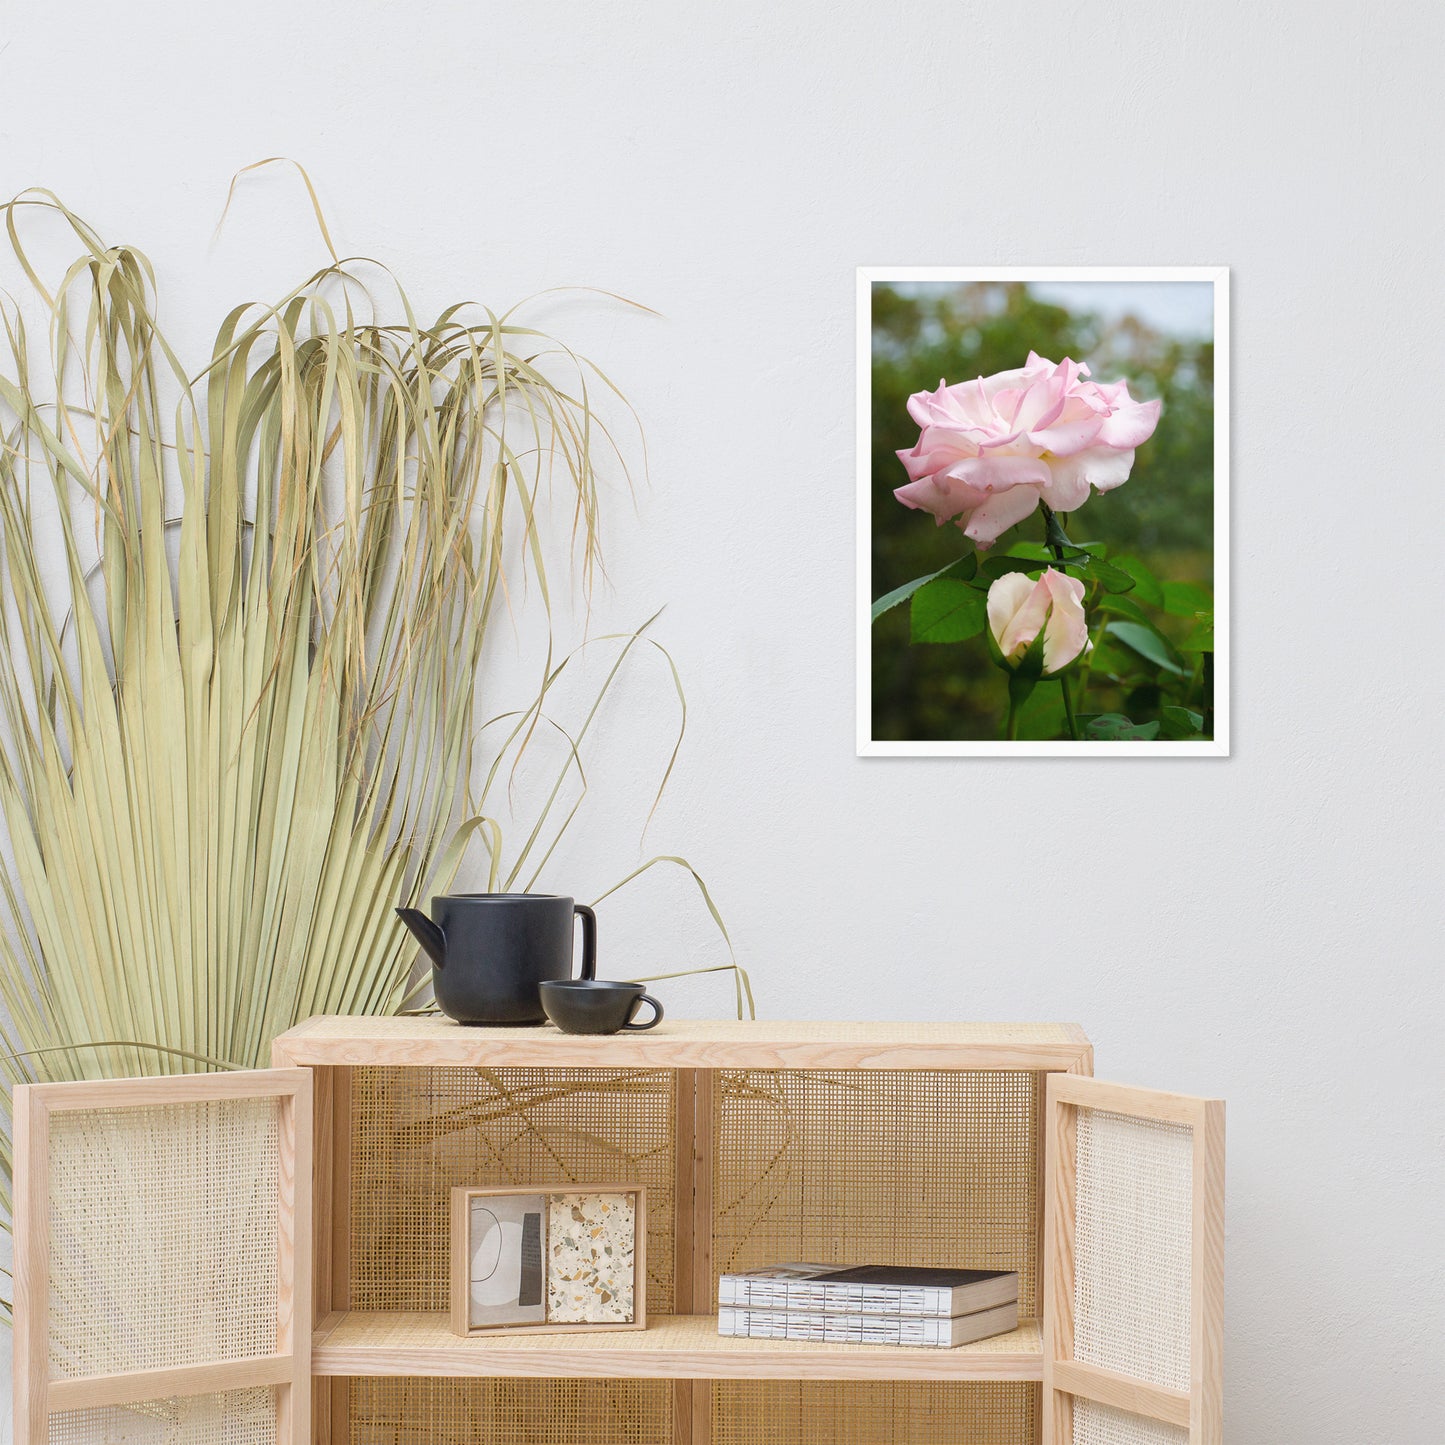 Framed Floral Pictures: Admiration - Pink Rose Floral / Botanical / Nature Photo Framed Wall Art Print - Artwork - Wall Decor - Home Decor